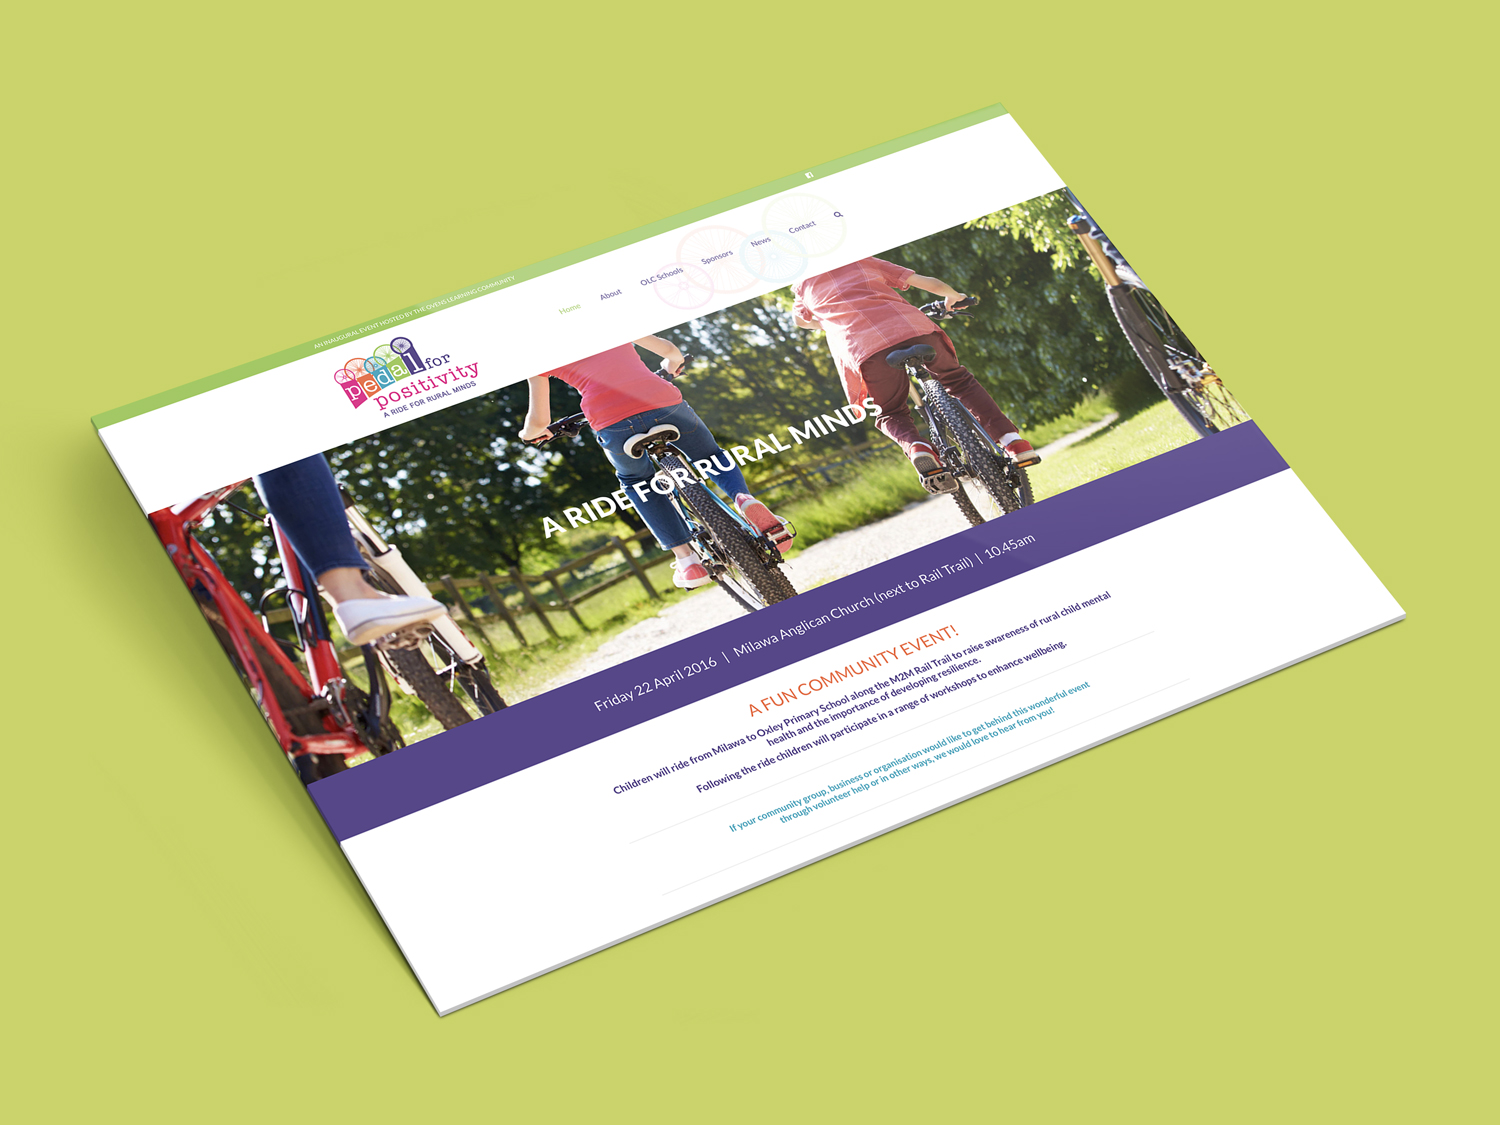 Purple Possum Design – Web Design Wangaratta – Pedal for Positivity